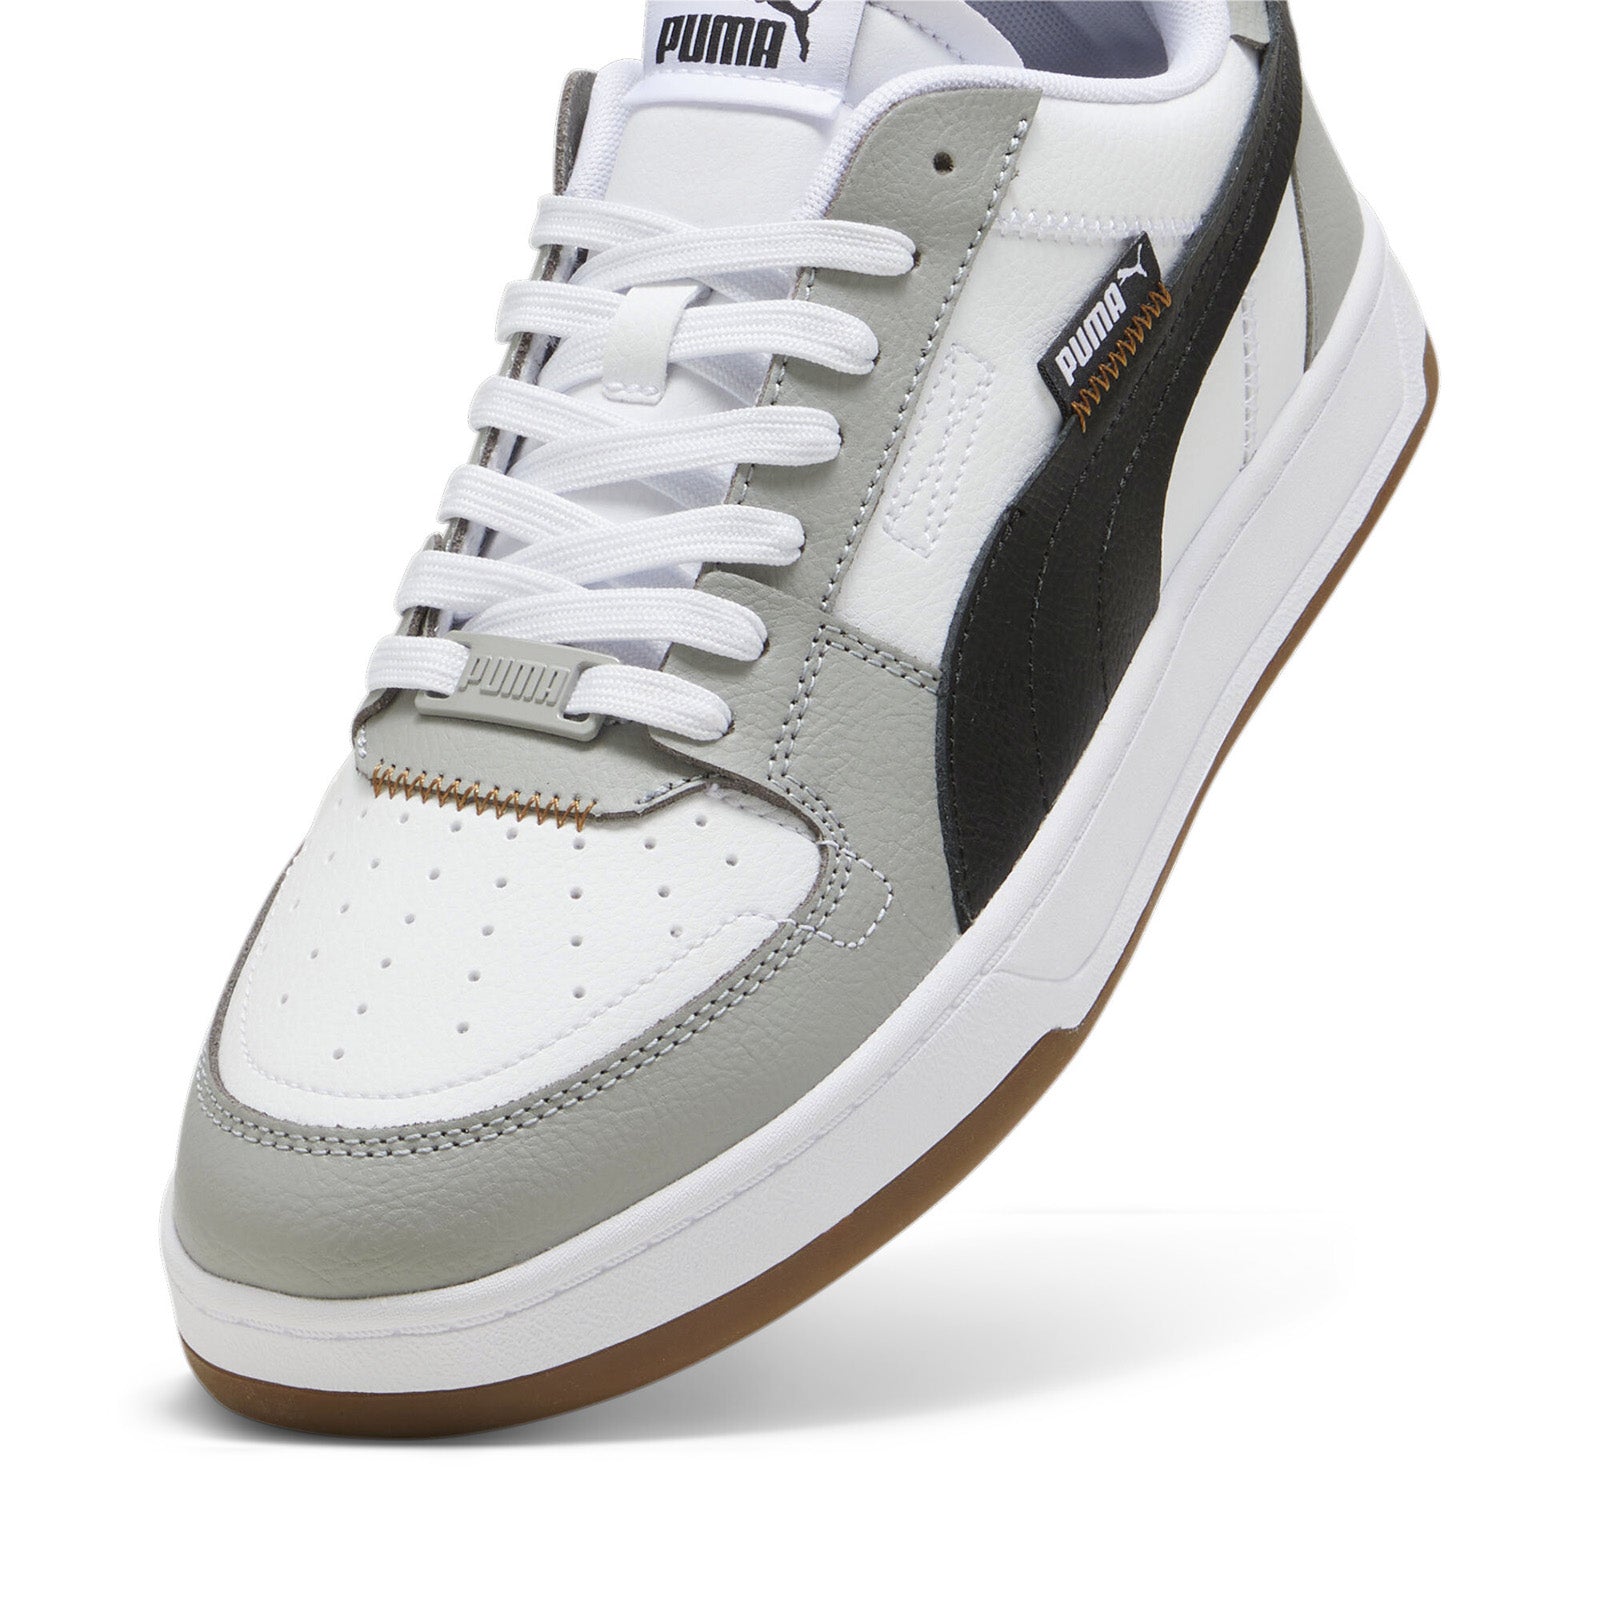 Puma Caven 2.0 VTG 39233213 Mens White Lifestyle Sneakers Shoes